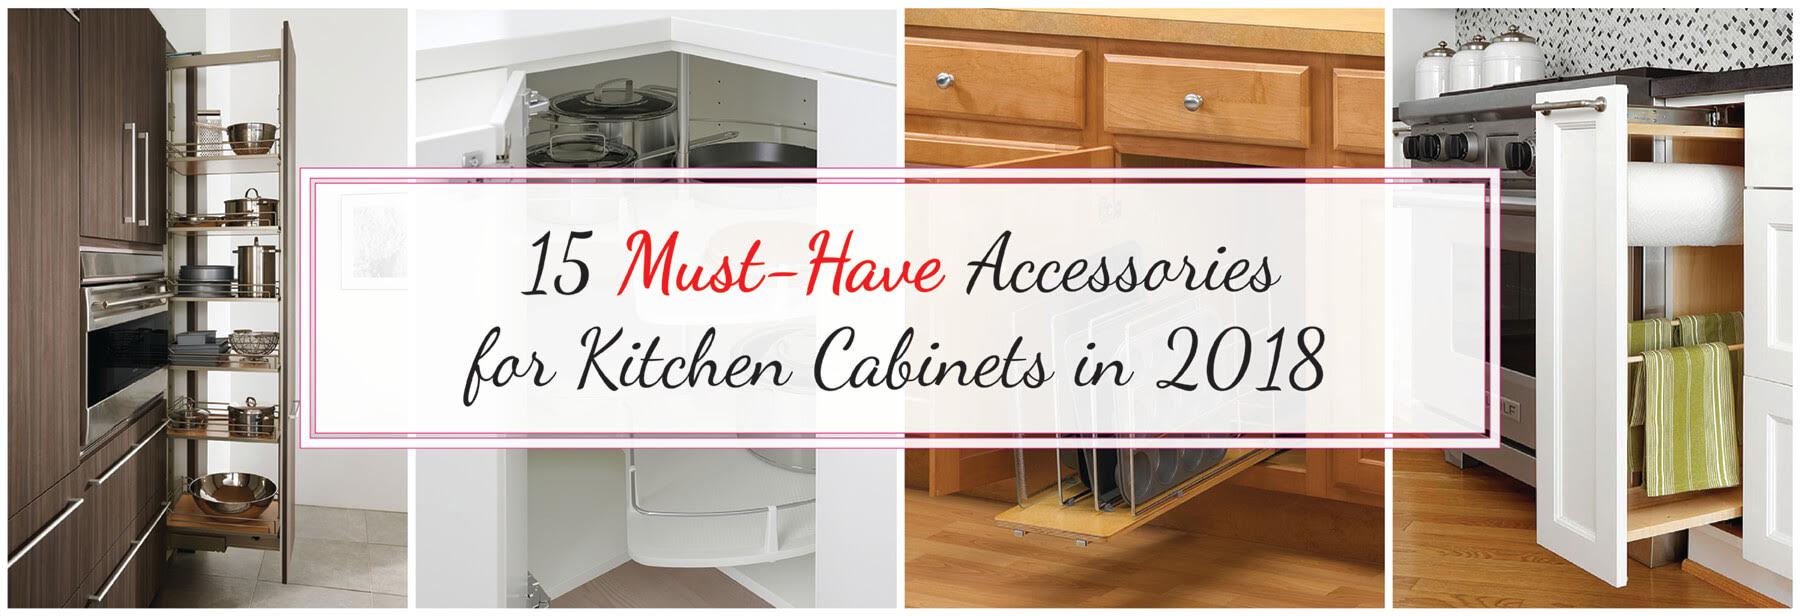 Top 5 Cabinet Storage and Organization Accessories Every Kitchen